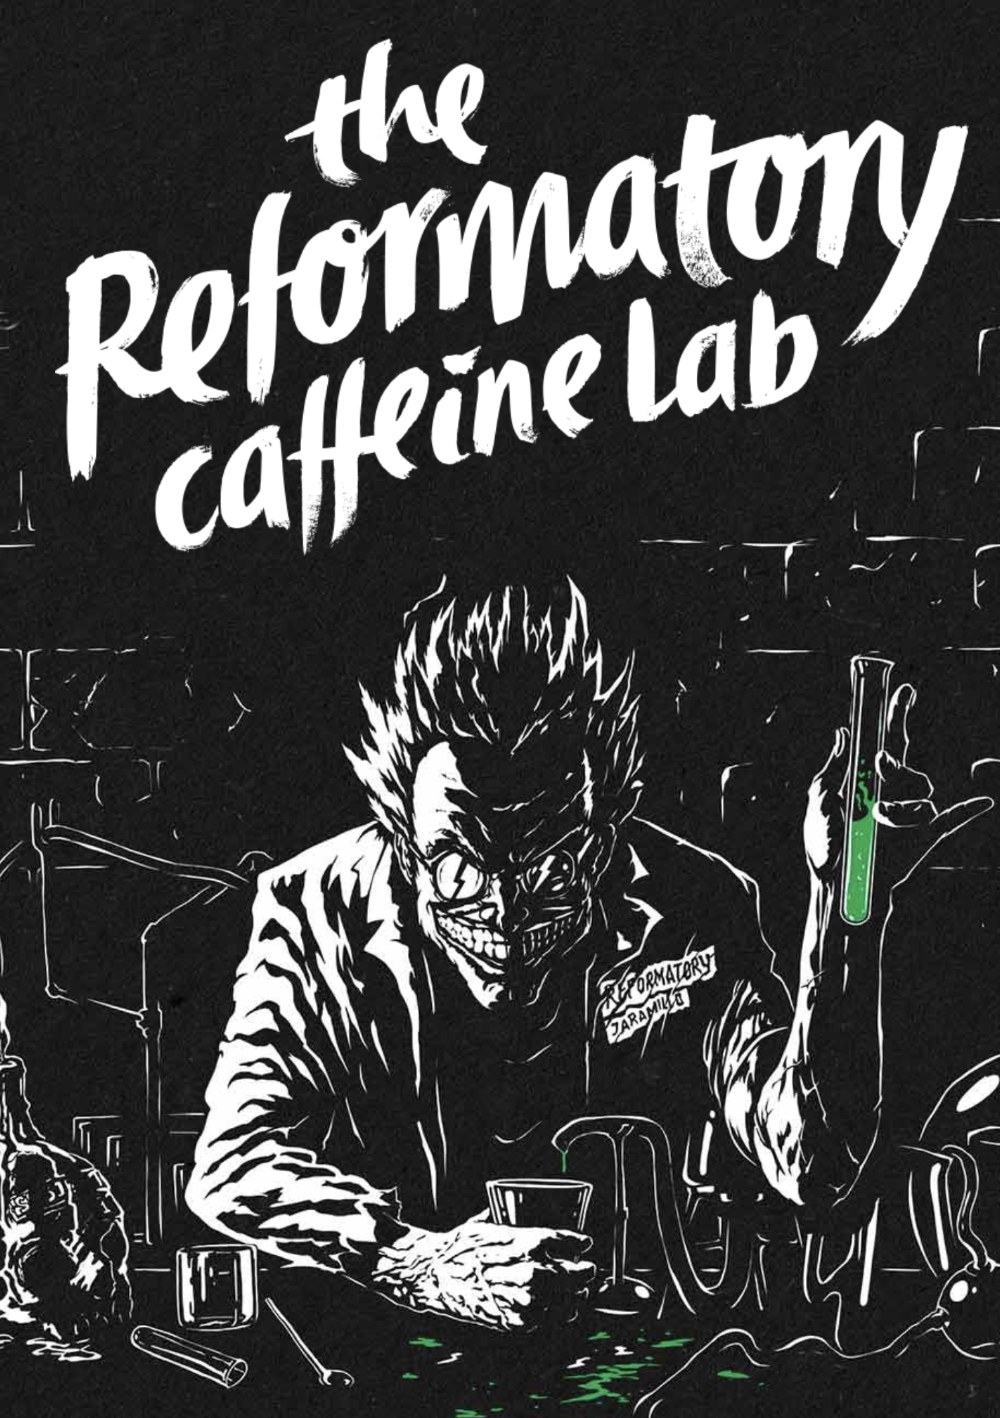 THE REFORMATORY COFFEE LAB